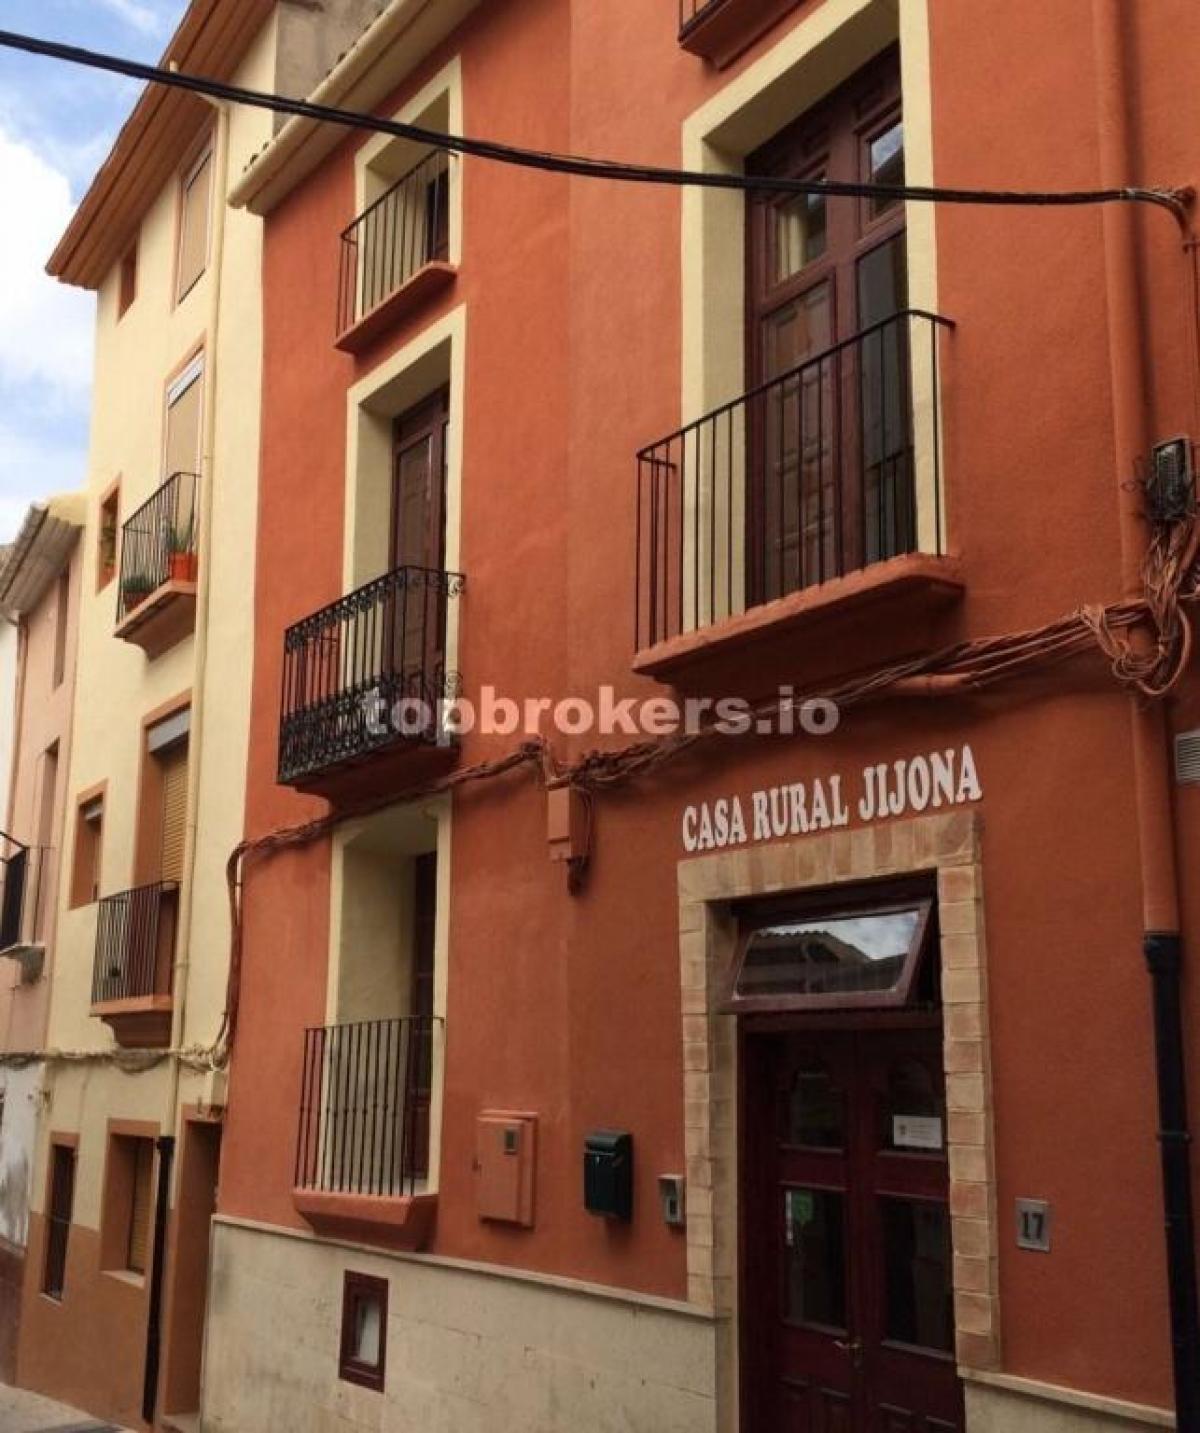 Picture of Home For Sale in Xixona, Alicante, Spain